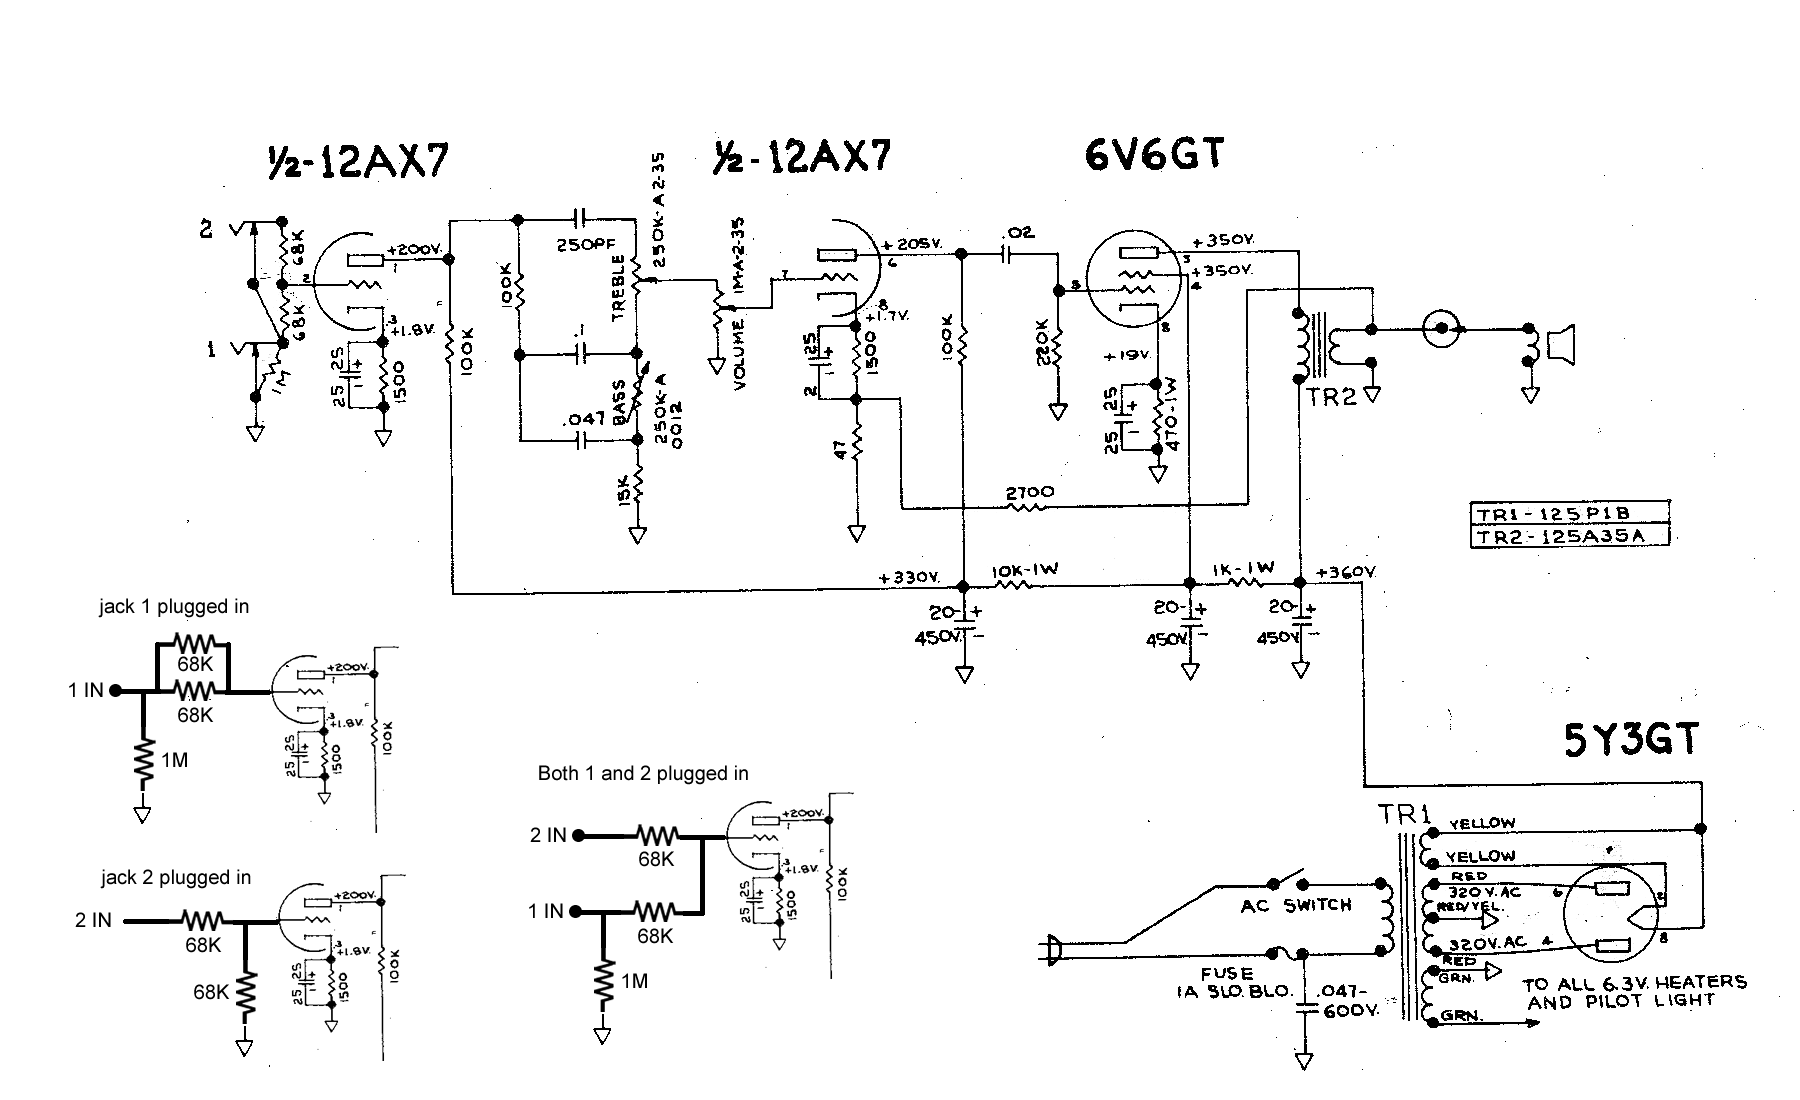 Electronic hand-drawn diagram